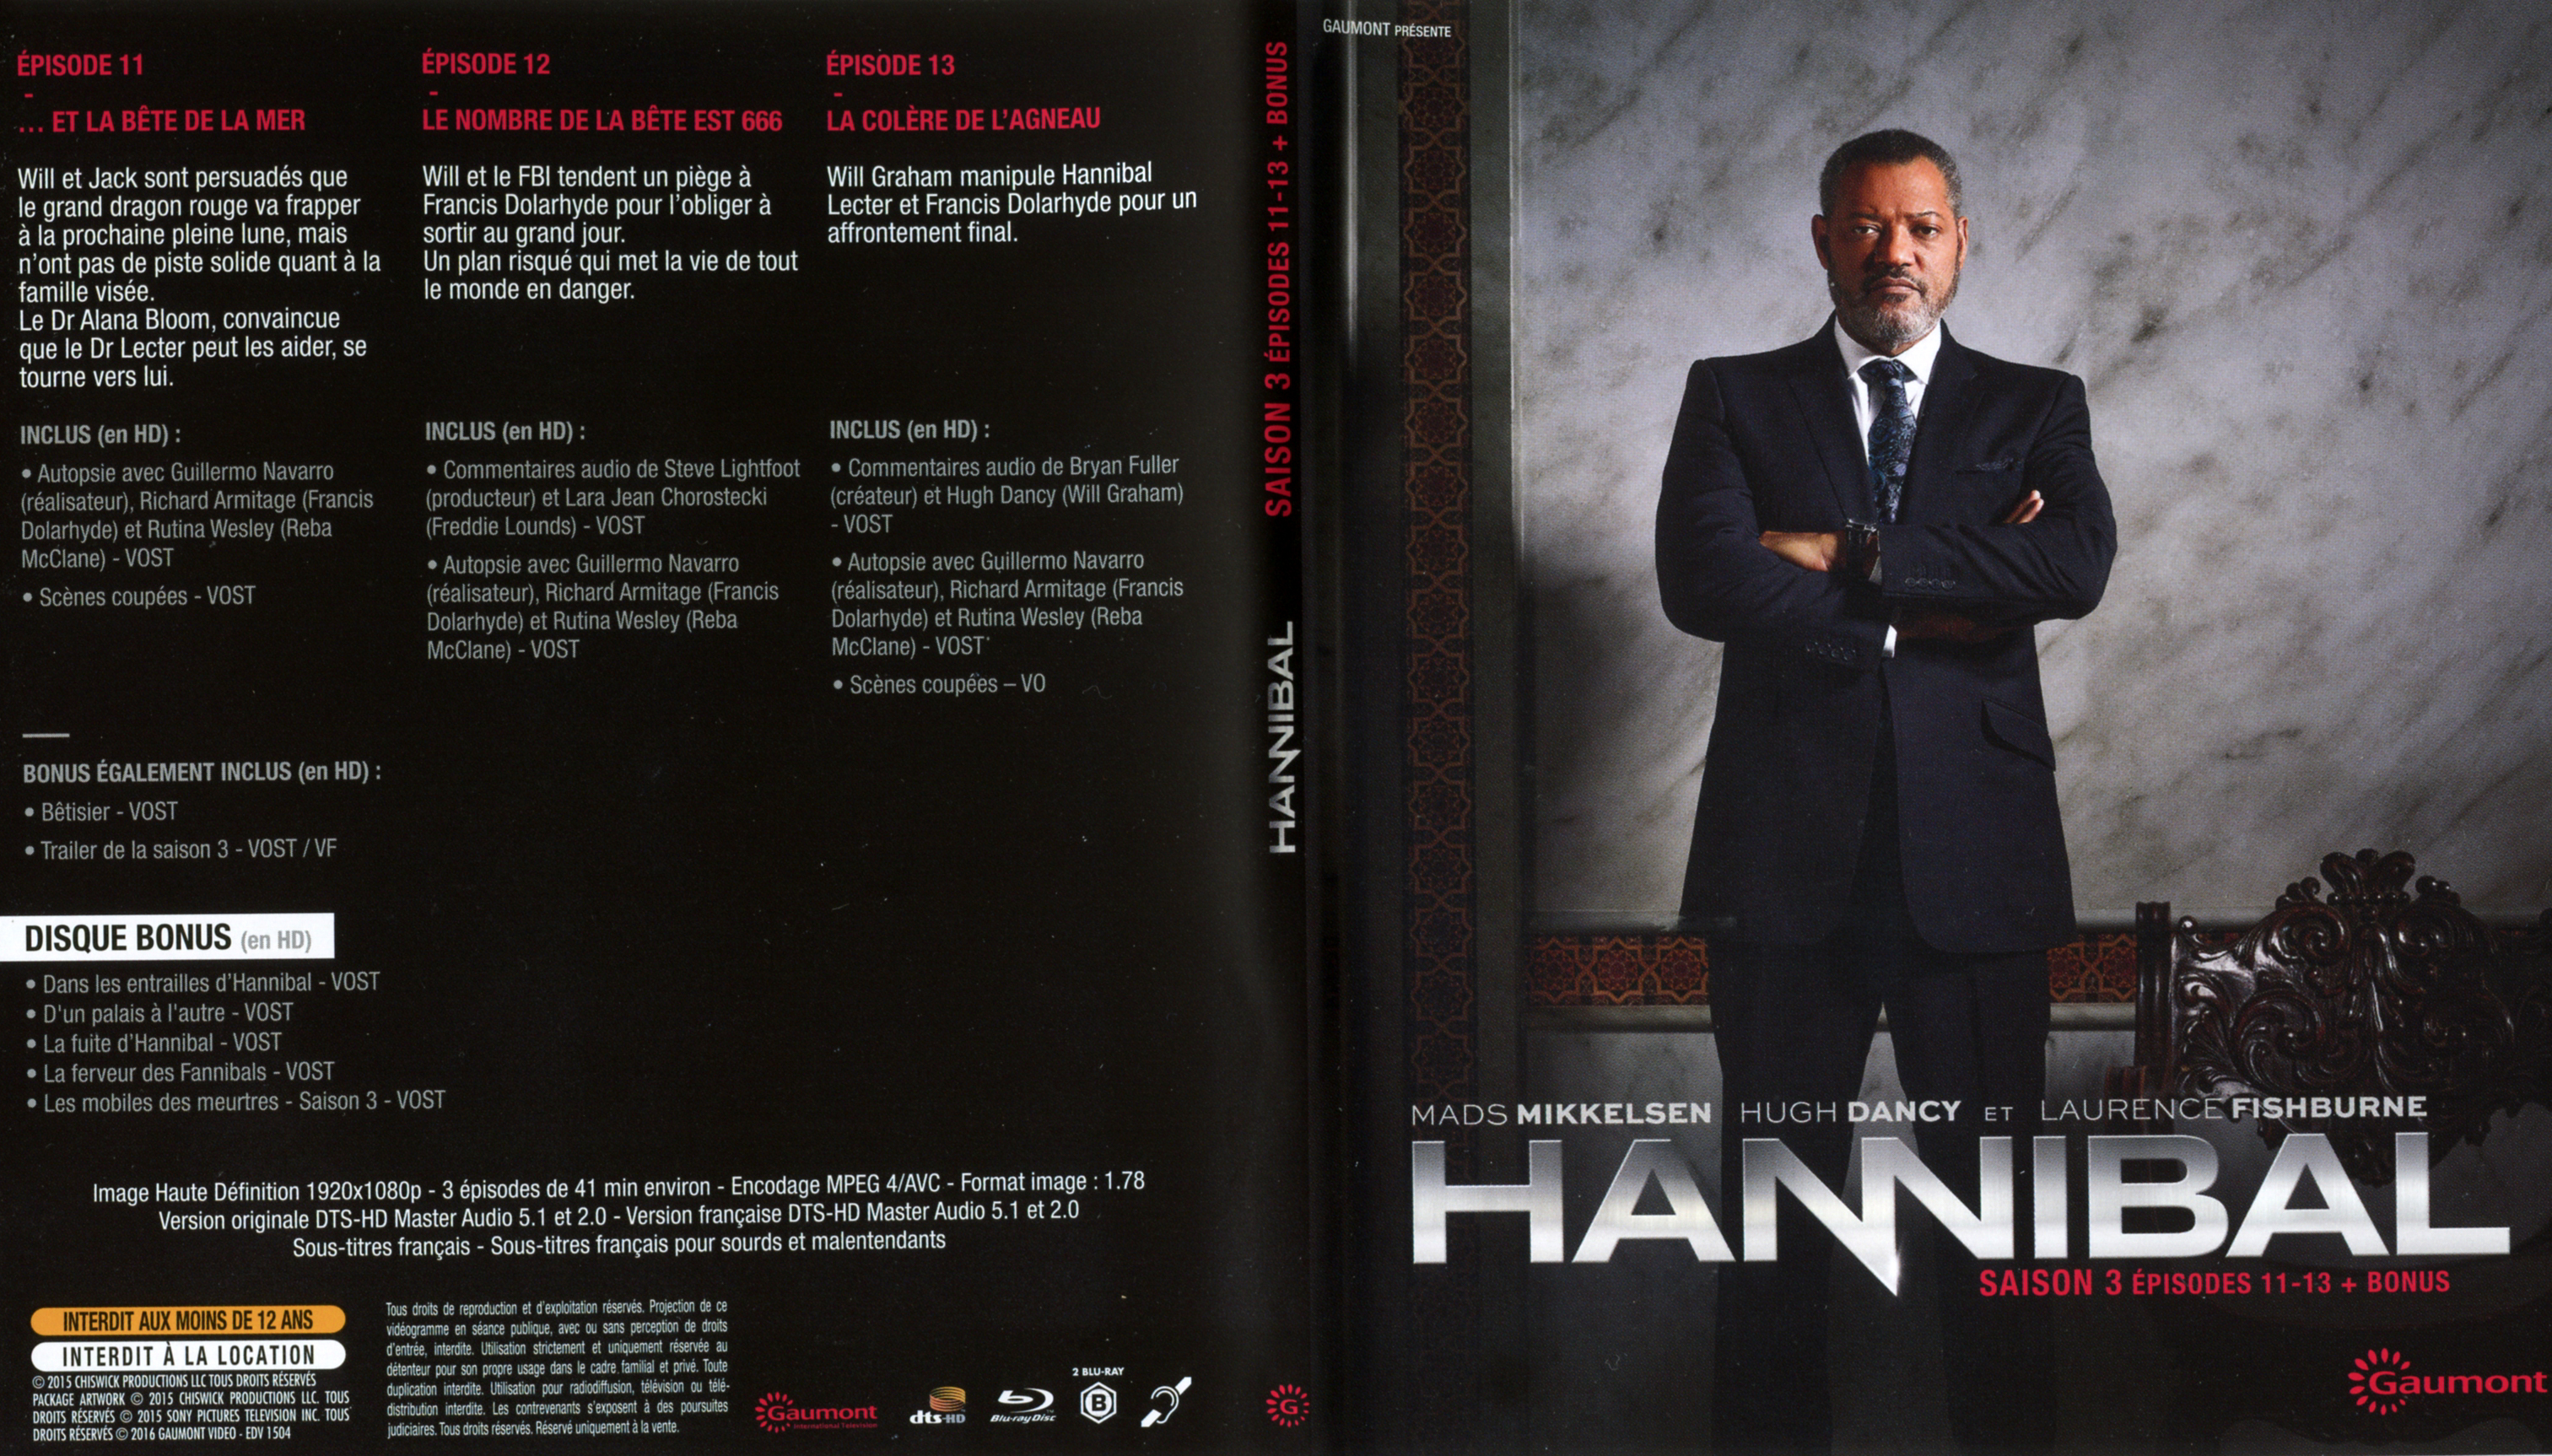 Jaquette DVD Hannibal Saison 3 DISC 4